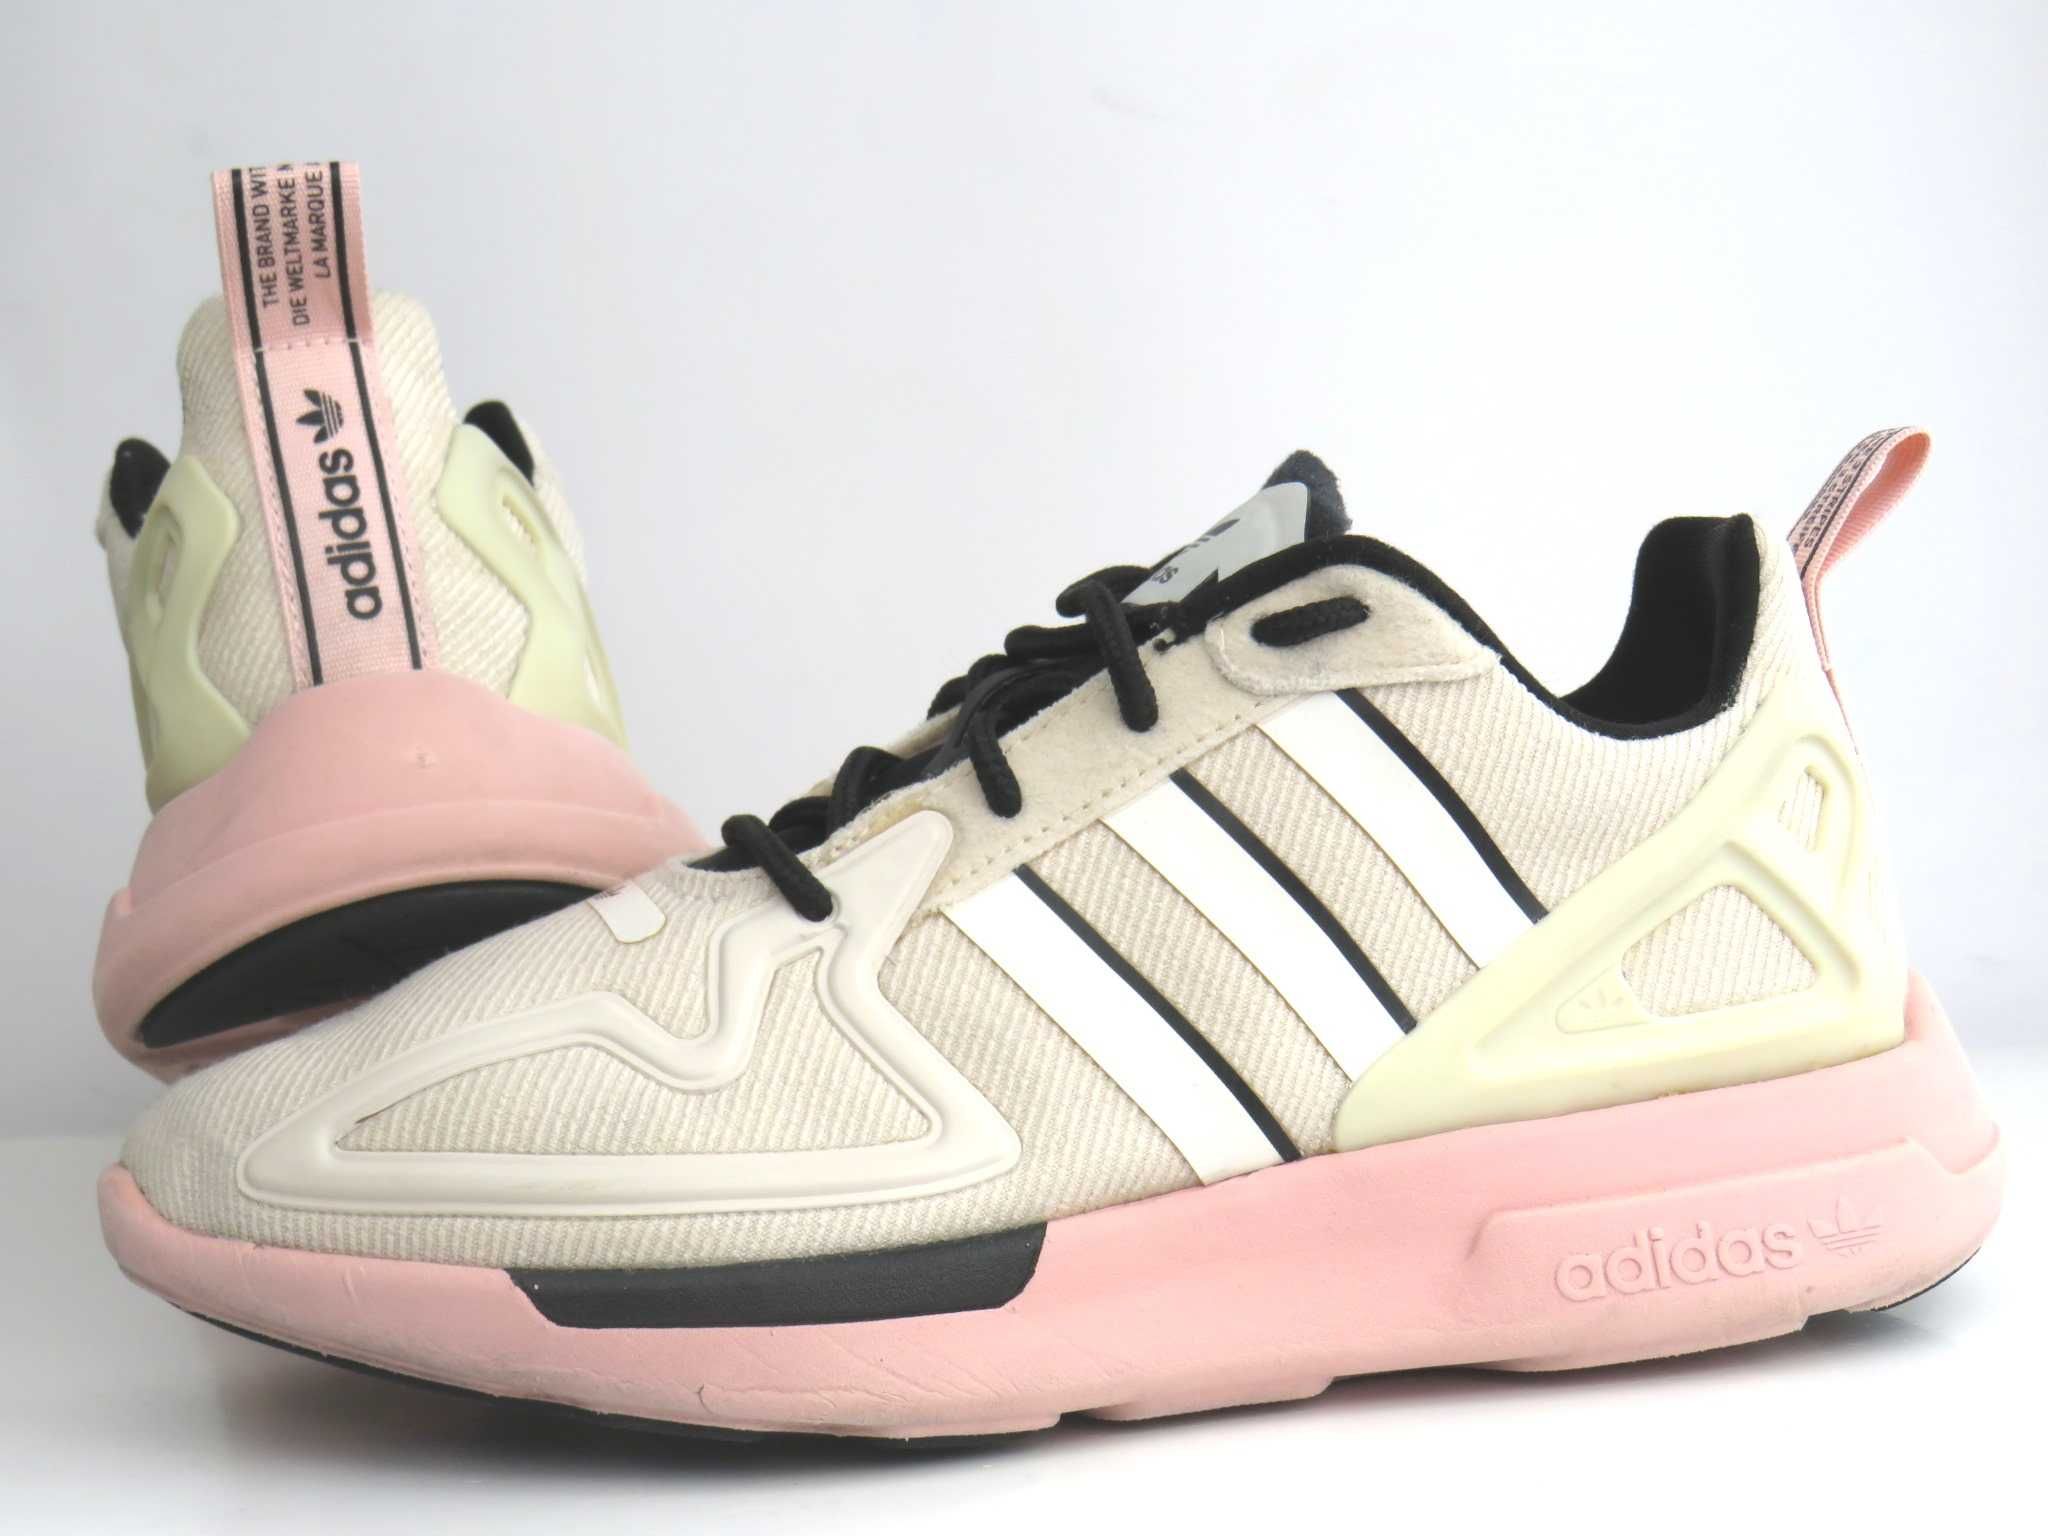 Adidas Originals buty damskie r 37,3 -50%